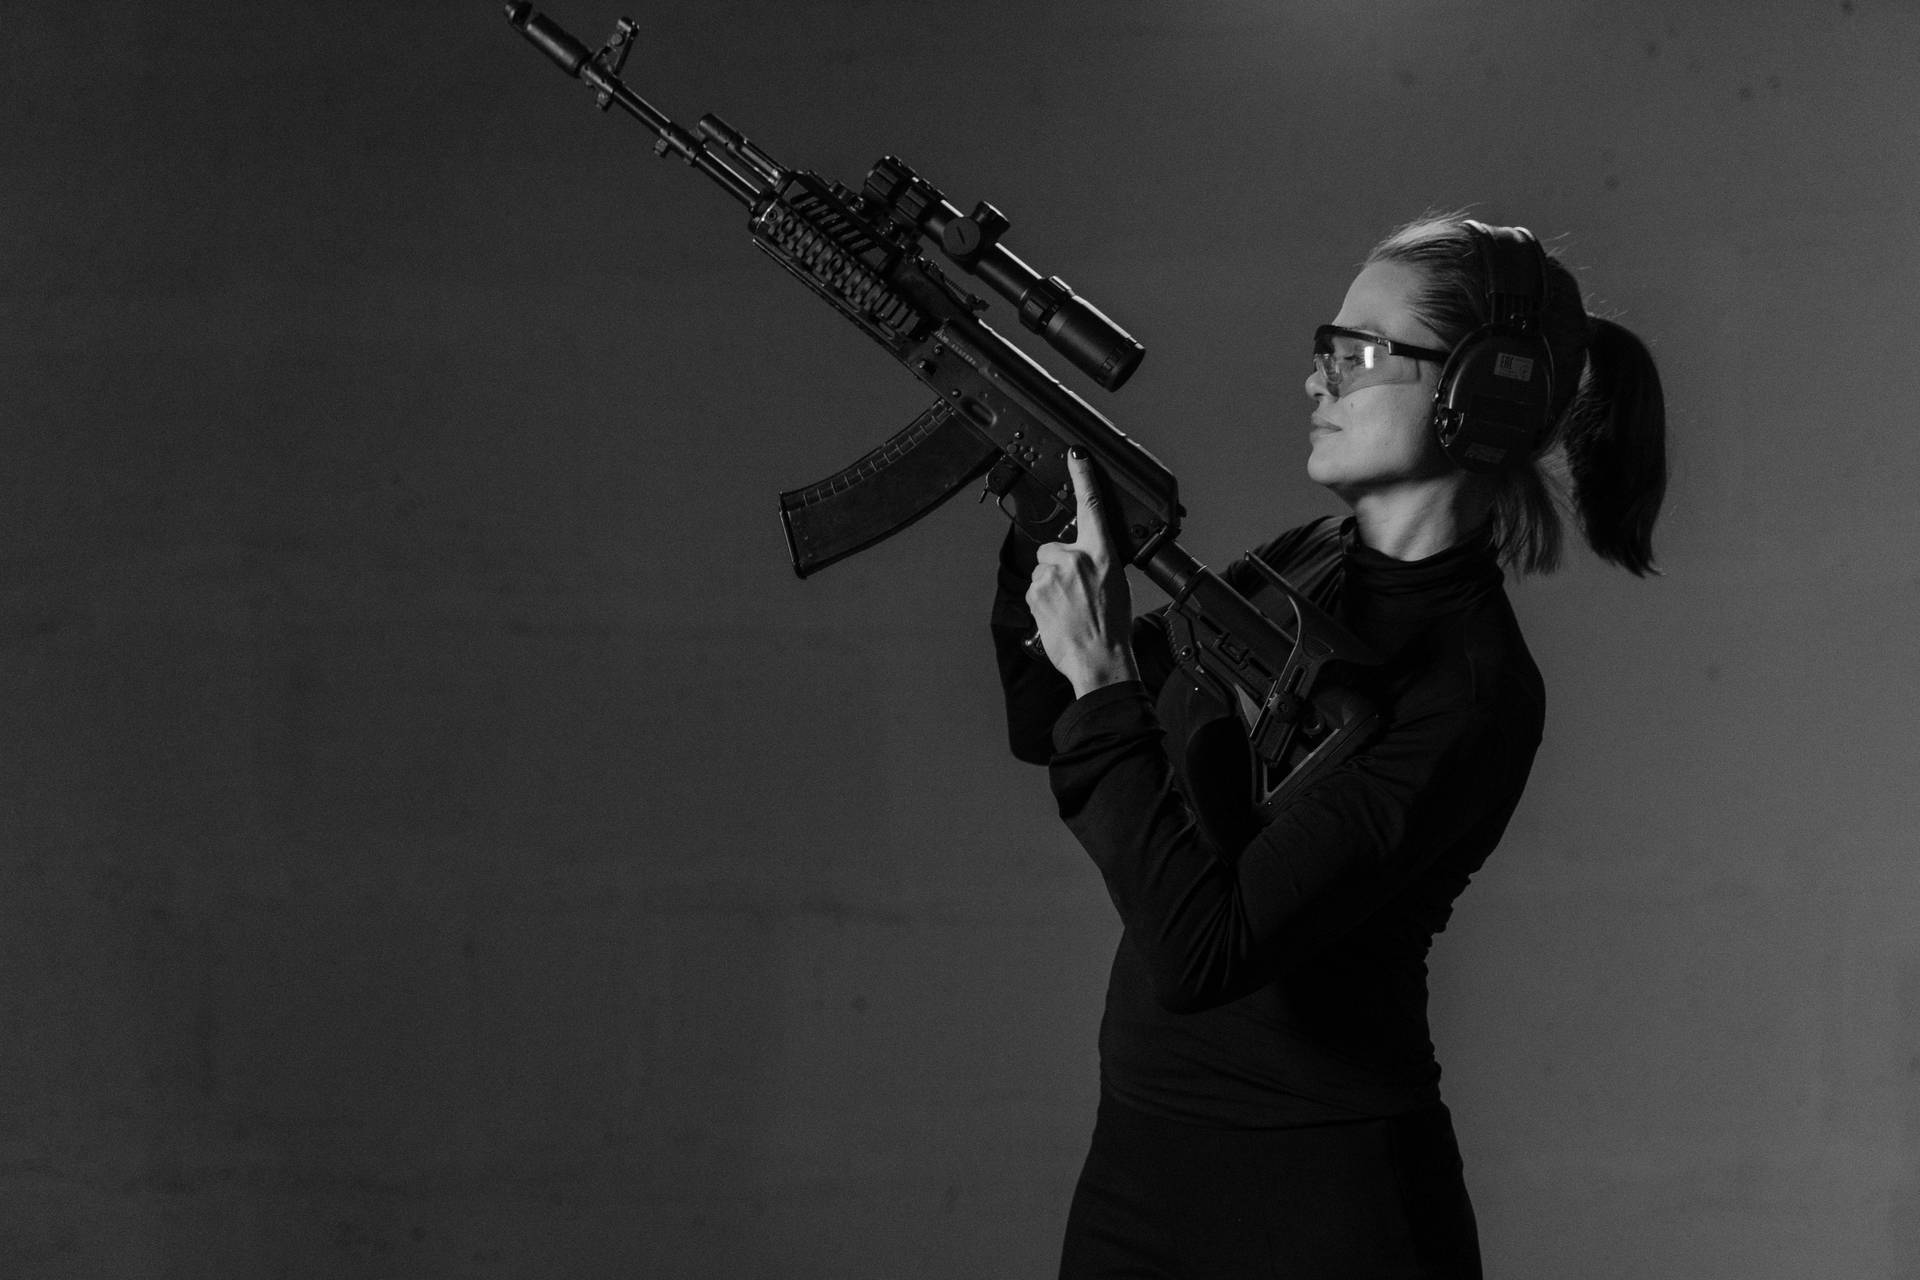 Brave Female Sniper On Duty